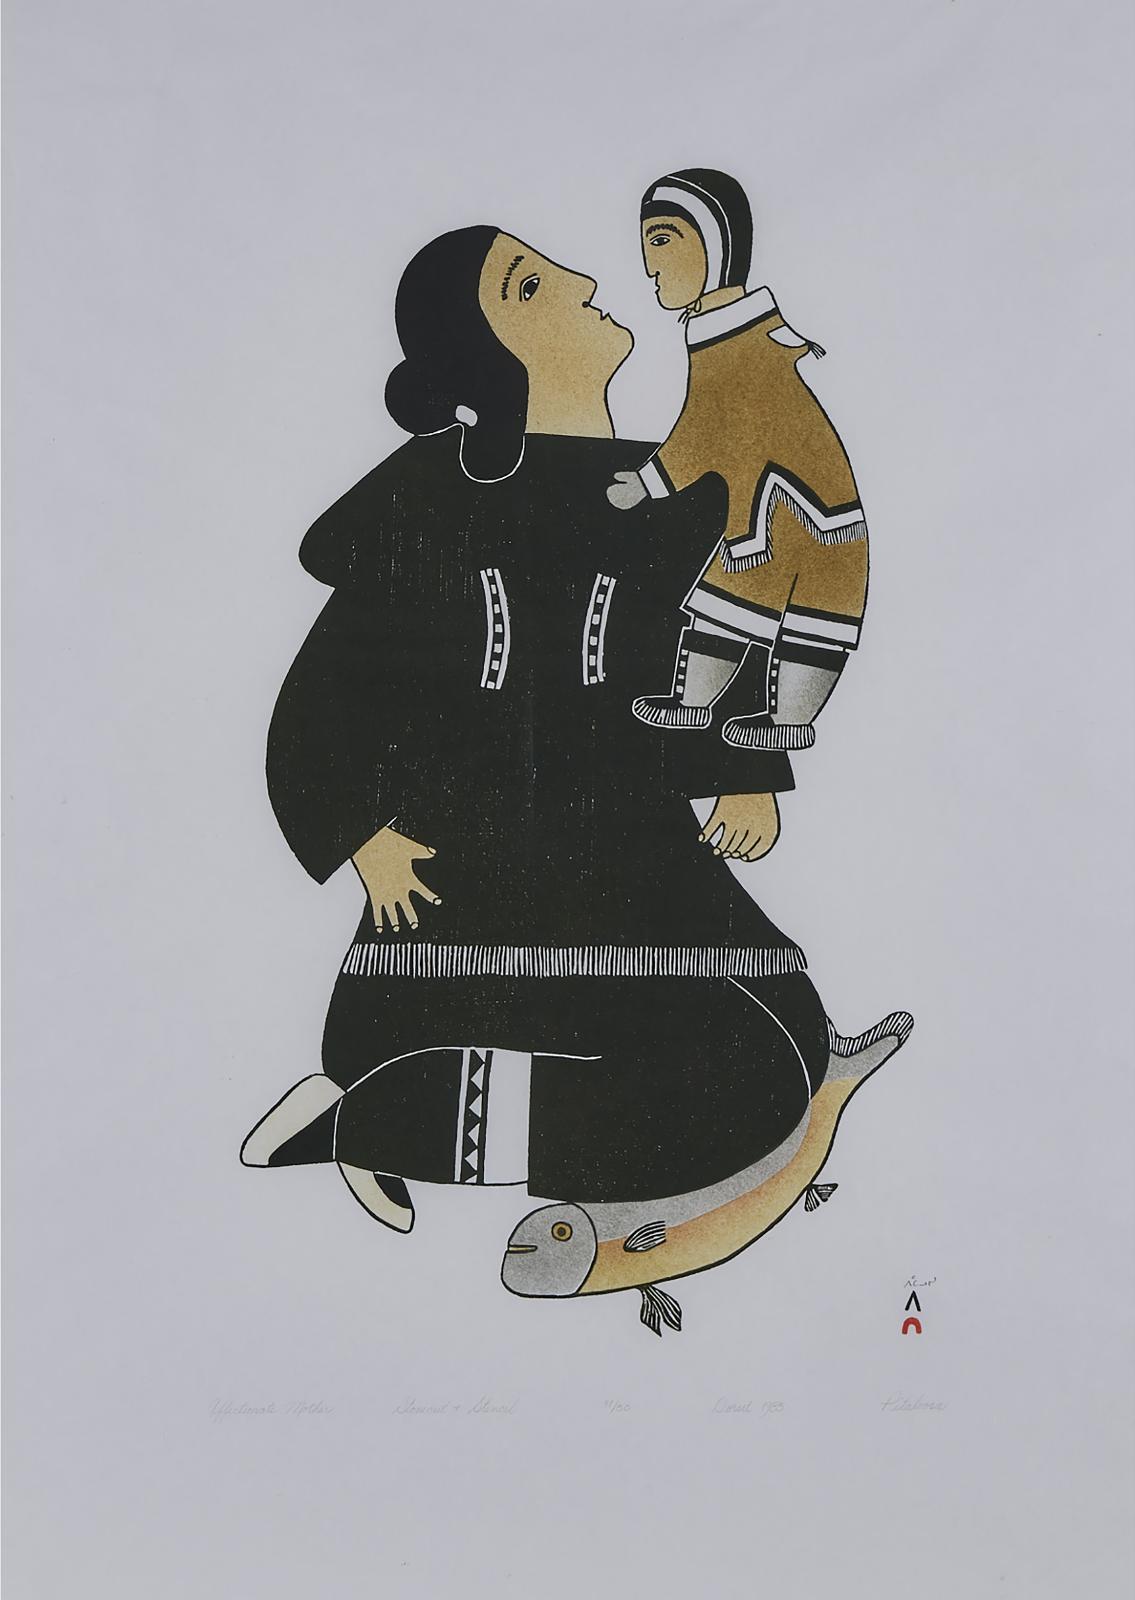 Pitaloosie Saila (1942-2021) - Affectionate Mother